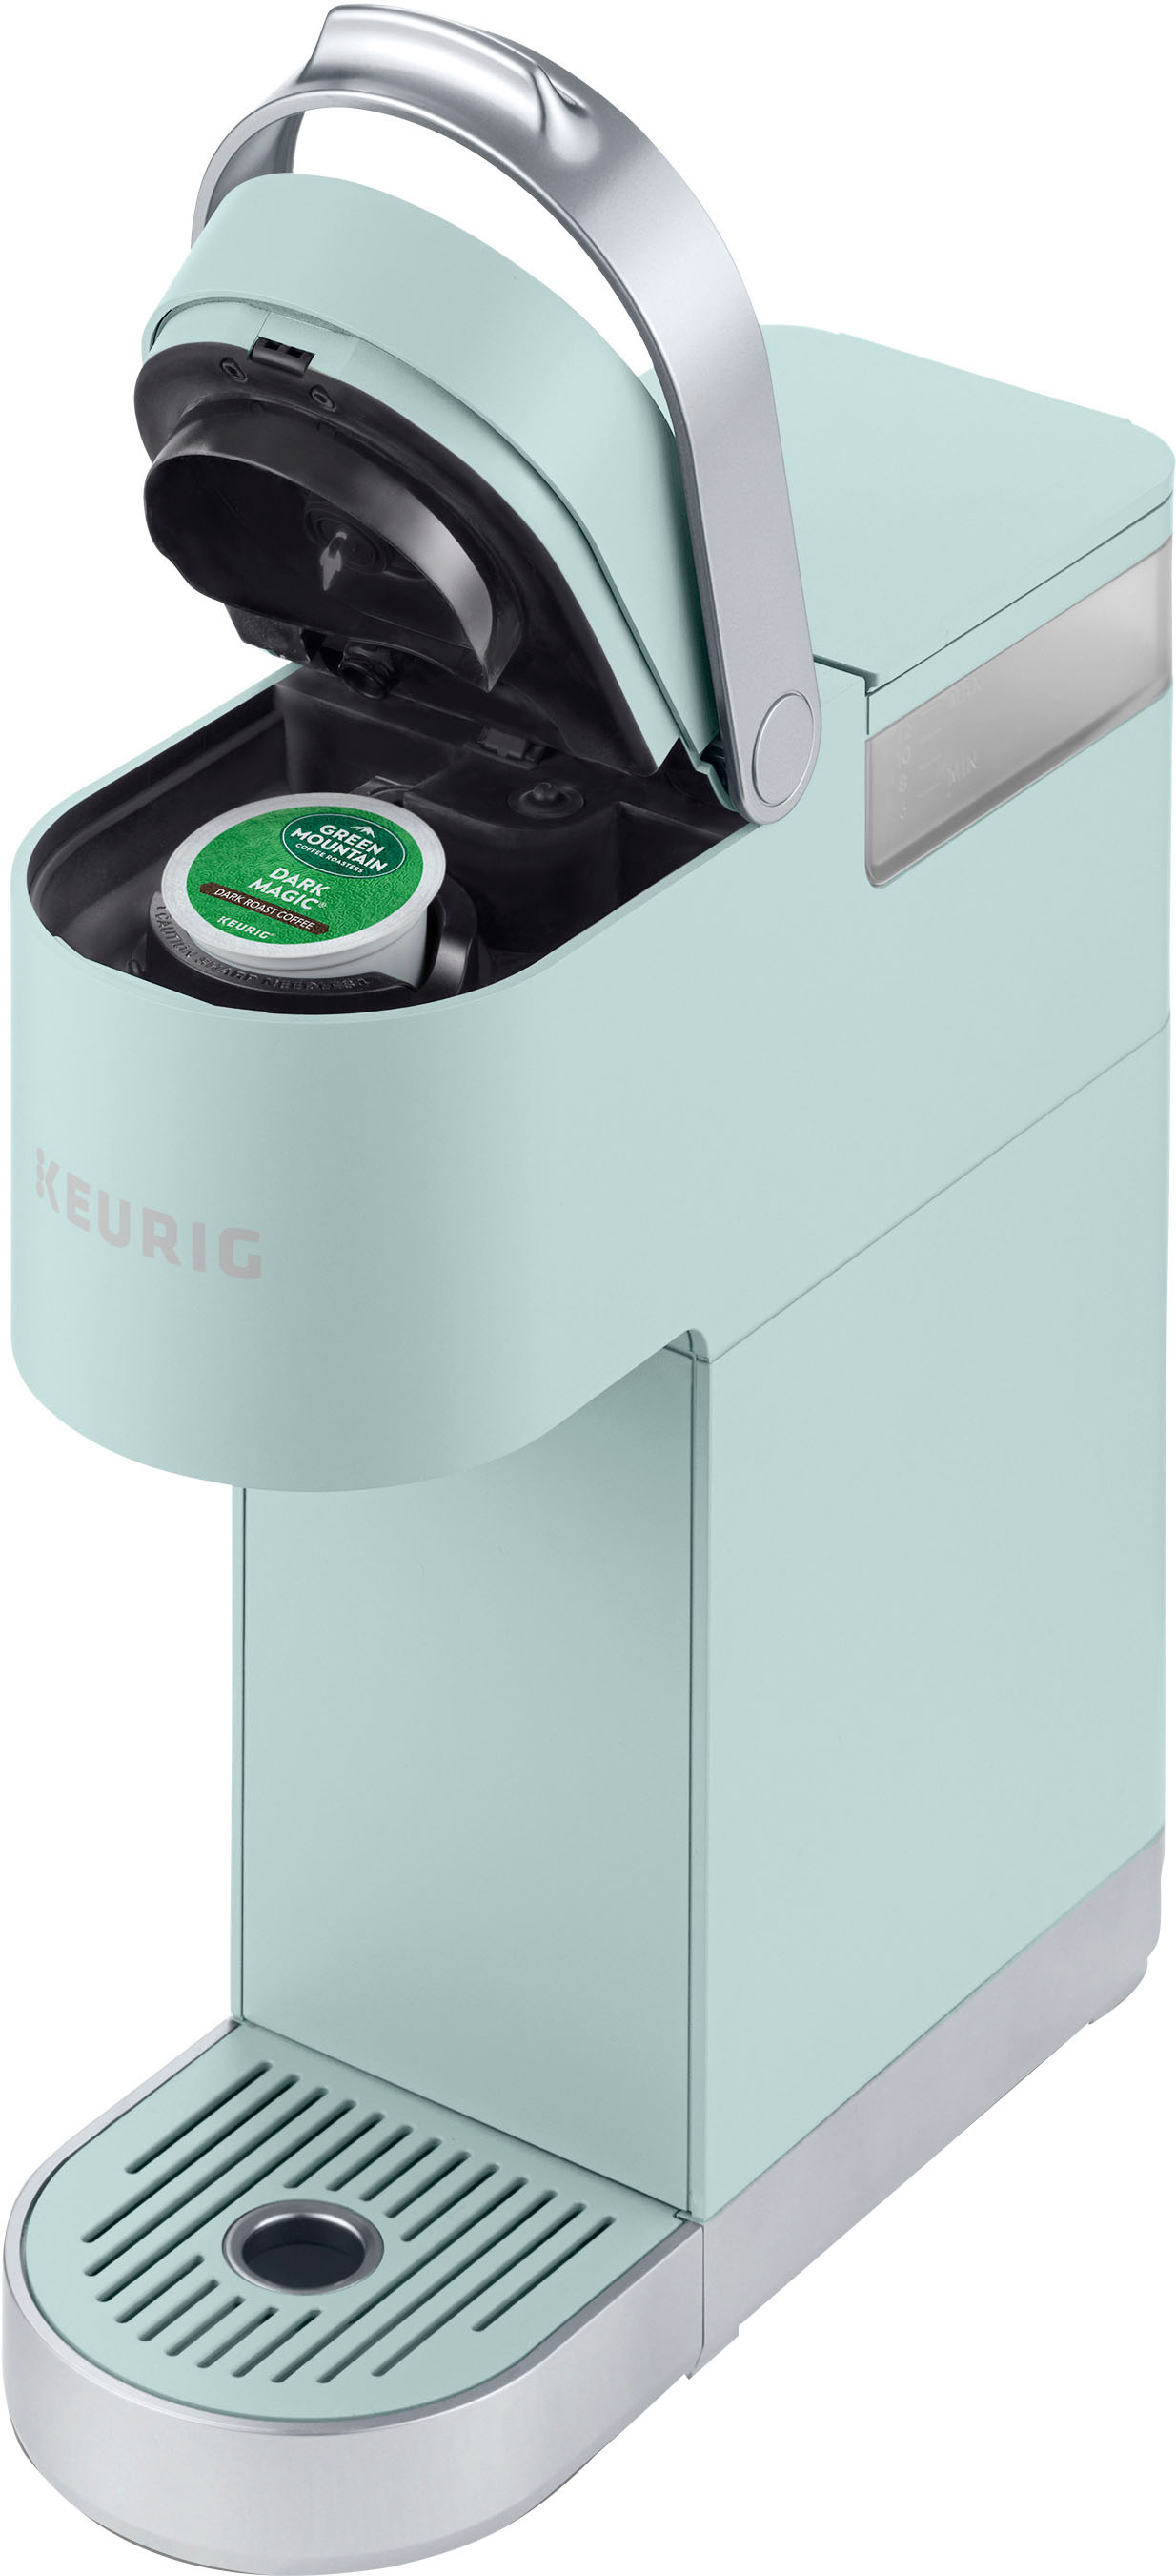 Angle View: Keurig - K-Mini Plus Single Serve K-Cup Pod Coffee Maker - Misty Green